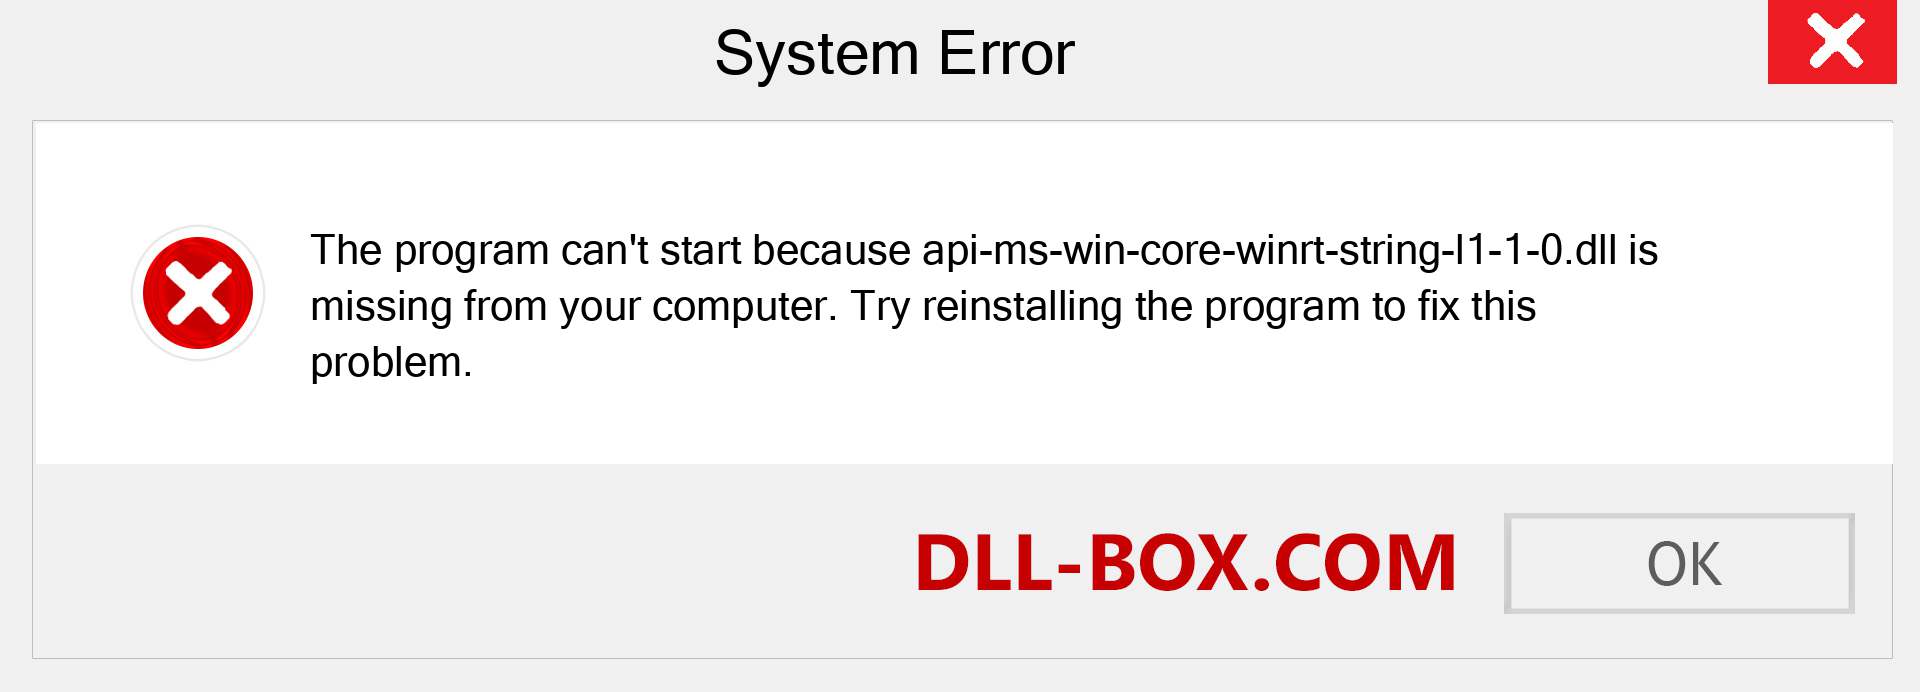  api-ms-win-core-winrt-string-l1-1-0.dll file is missing?. Download for Windows 7, 8, 10 - Fix  api-ms-win-core-winrt-string-l1-1-0 dll Missing Error on Windows, photos, images